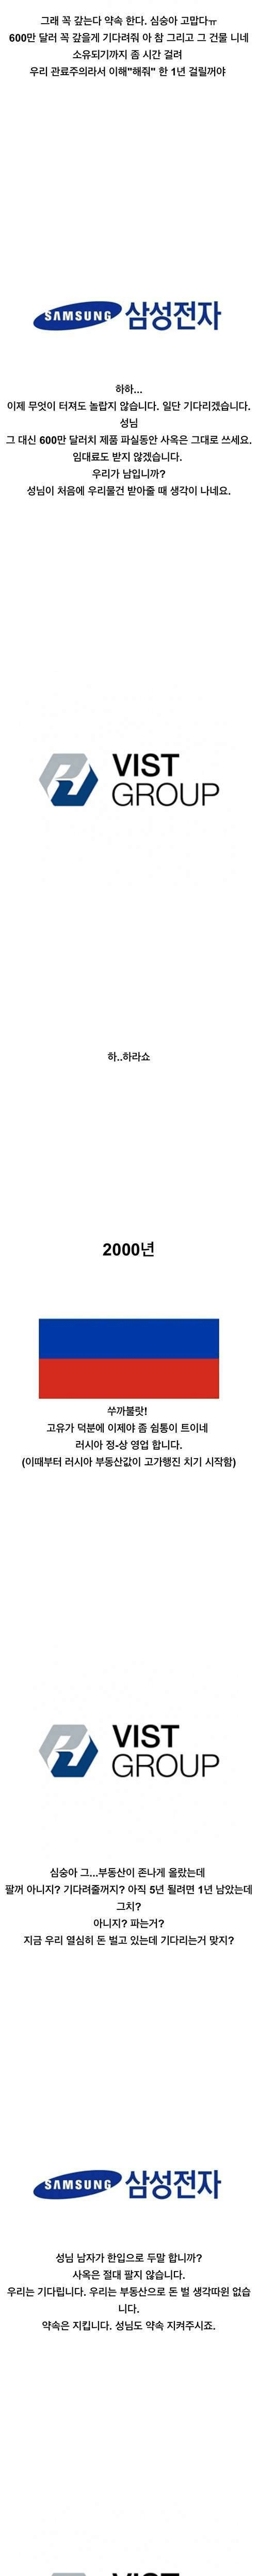 The reason Russia likes Korea.jpg